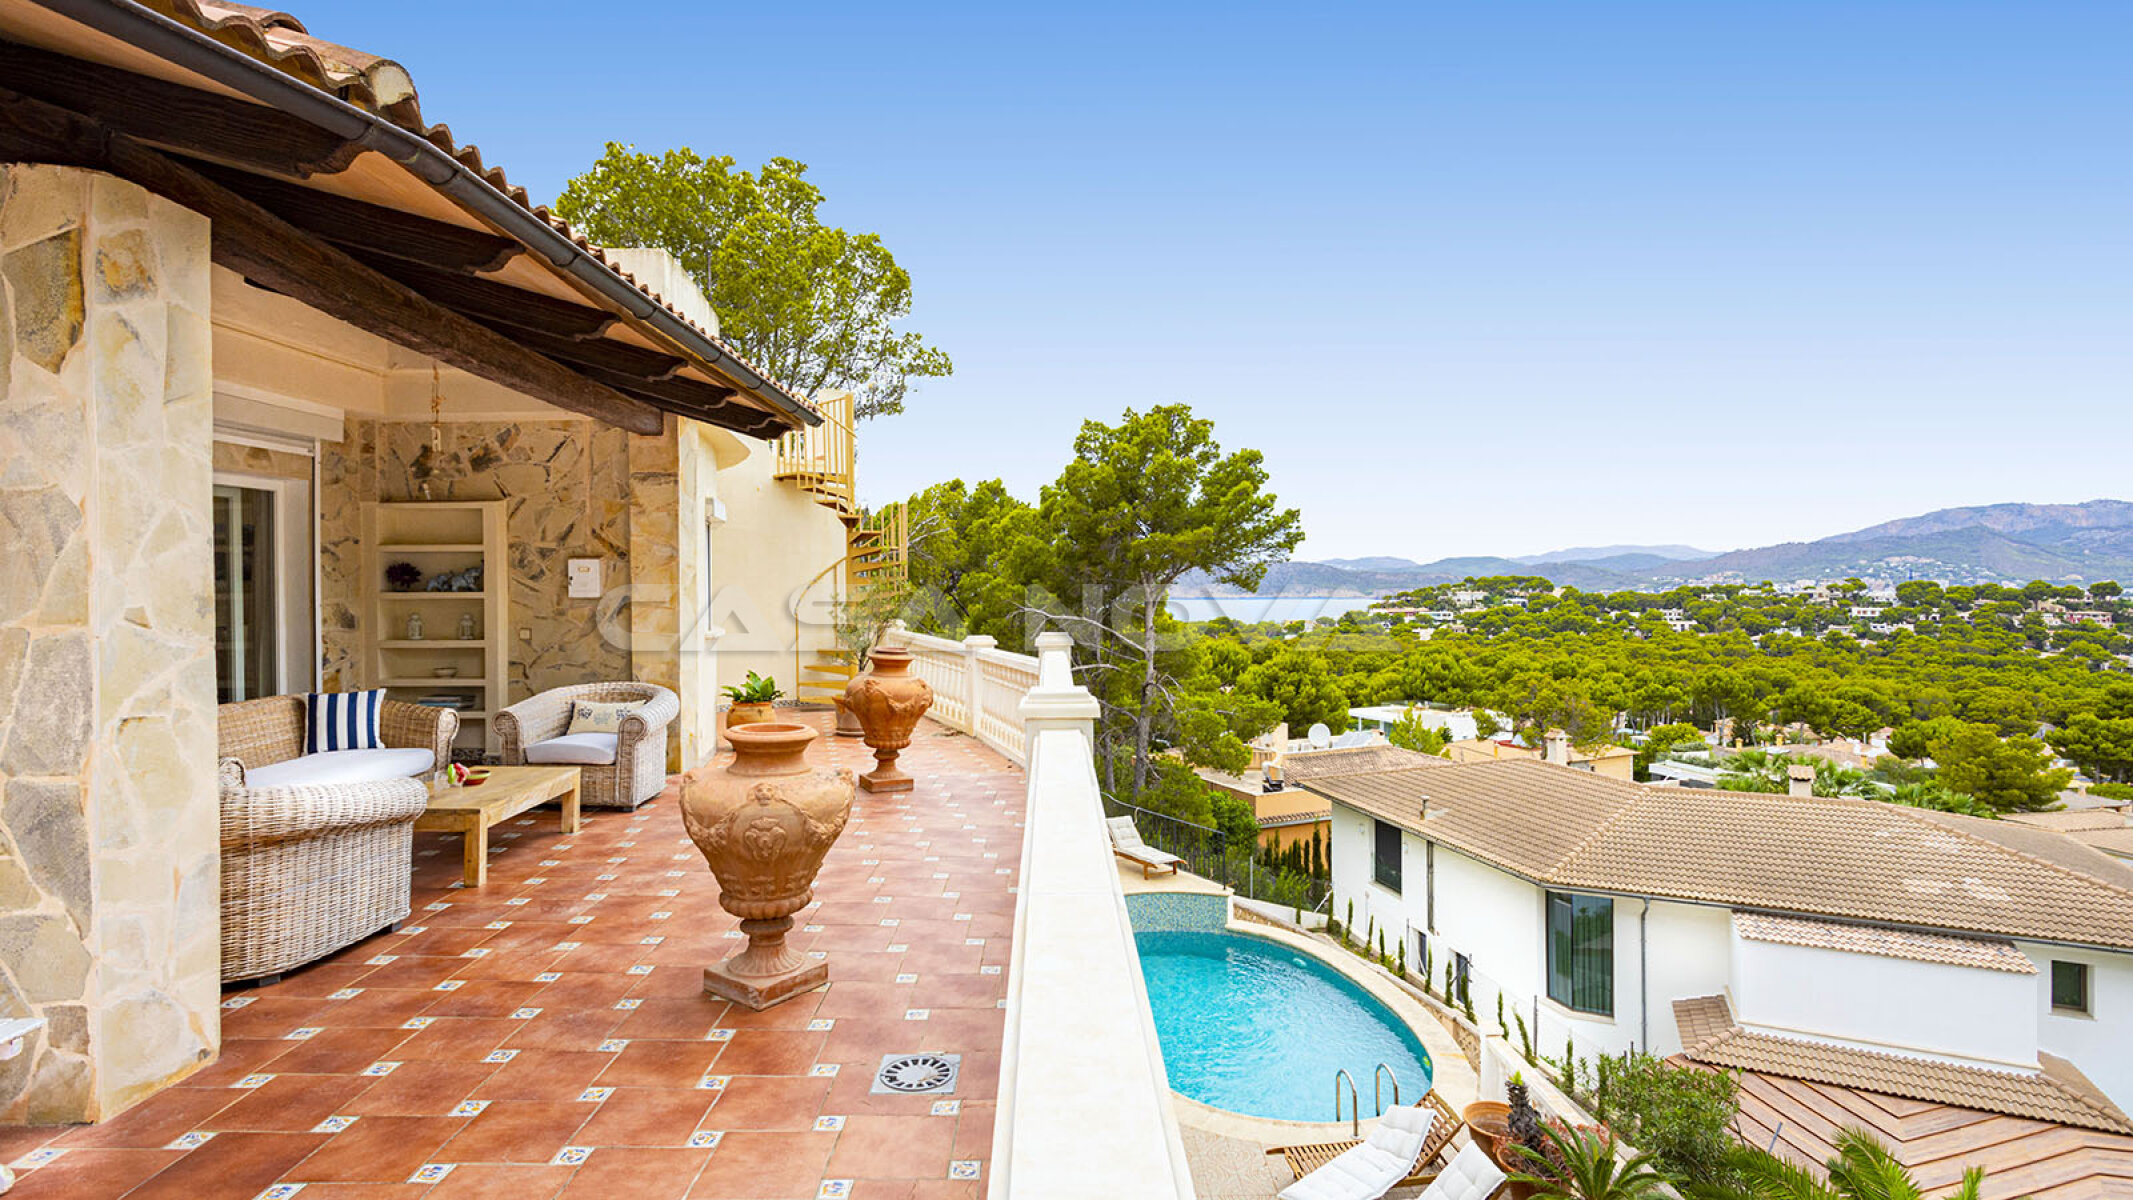 Great Majorca villa with magnificent views